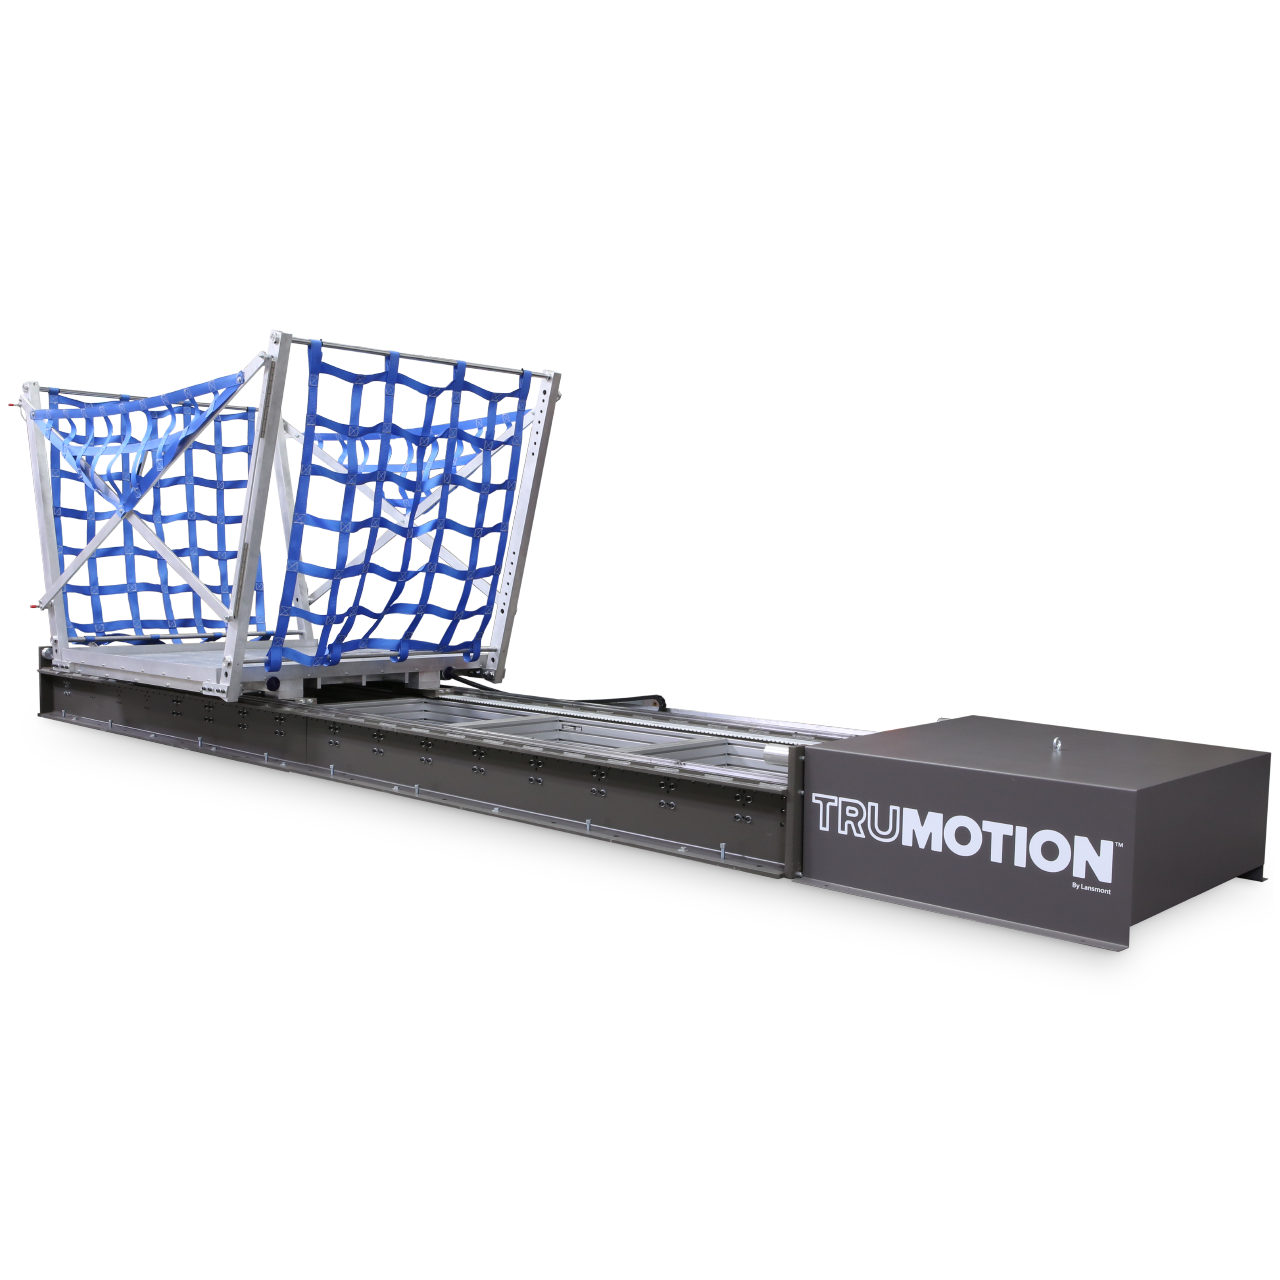 Lansmont - TruMotion Acceleration sled, unit load stability tester